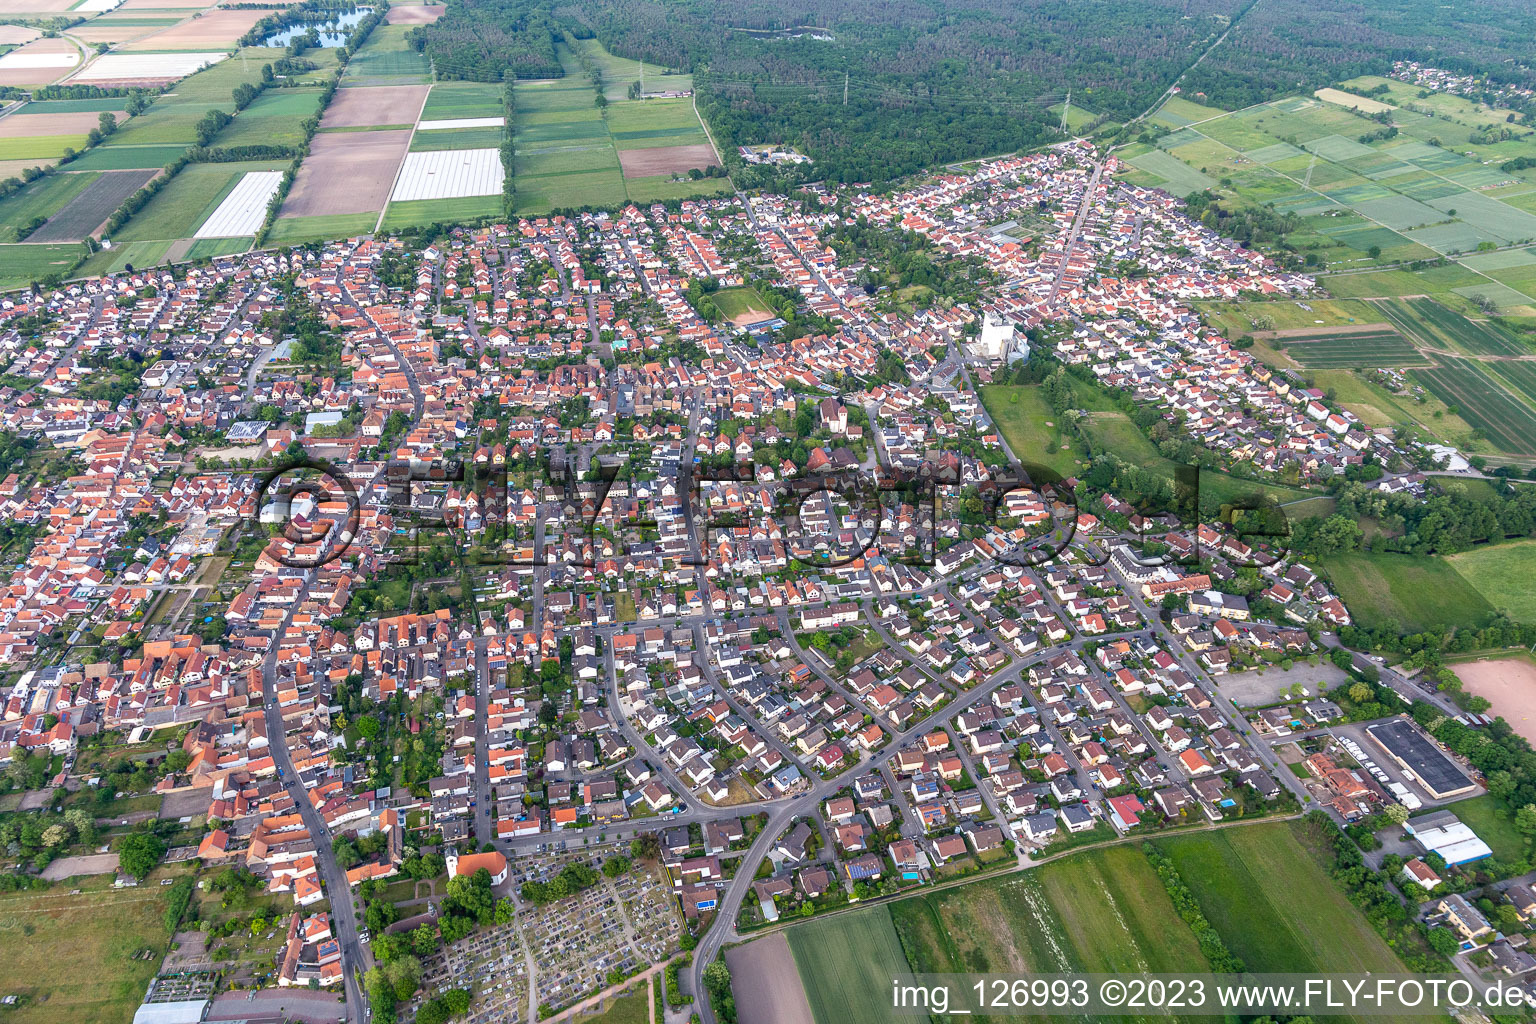 Aerial photograpy of District Iggelheim in Böhl-Iggelheim in the state Rhineland-Palatinate, Germany